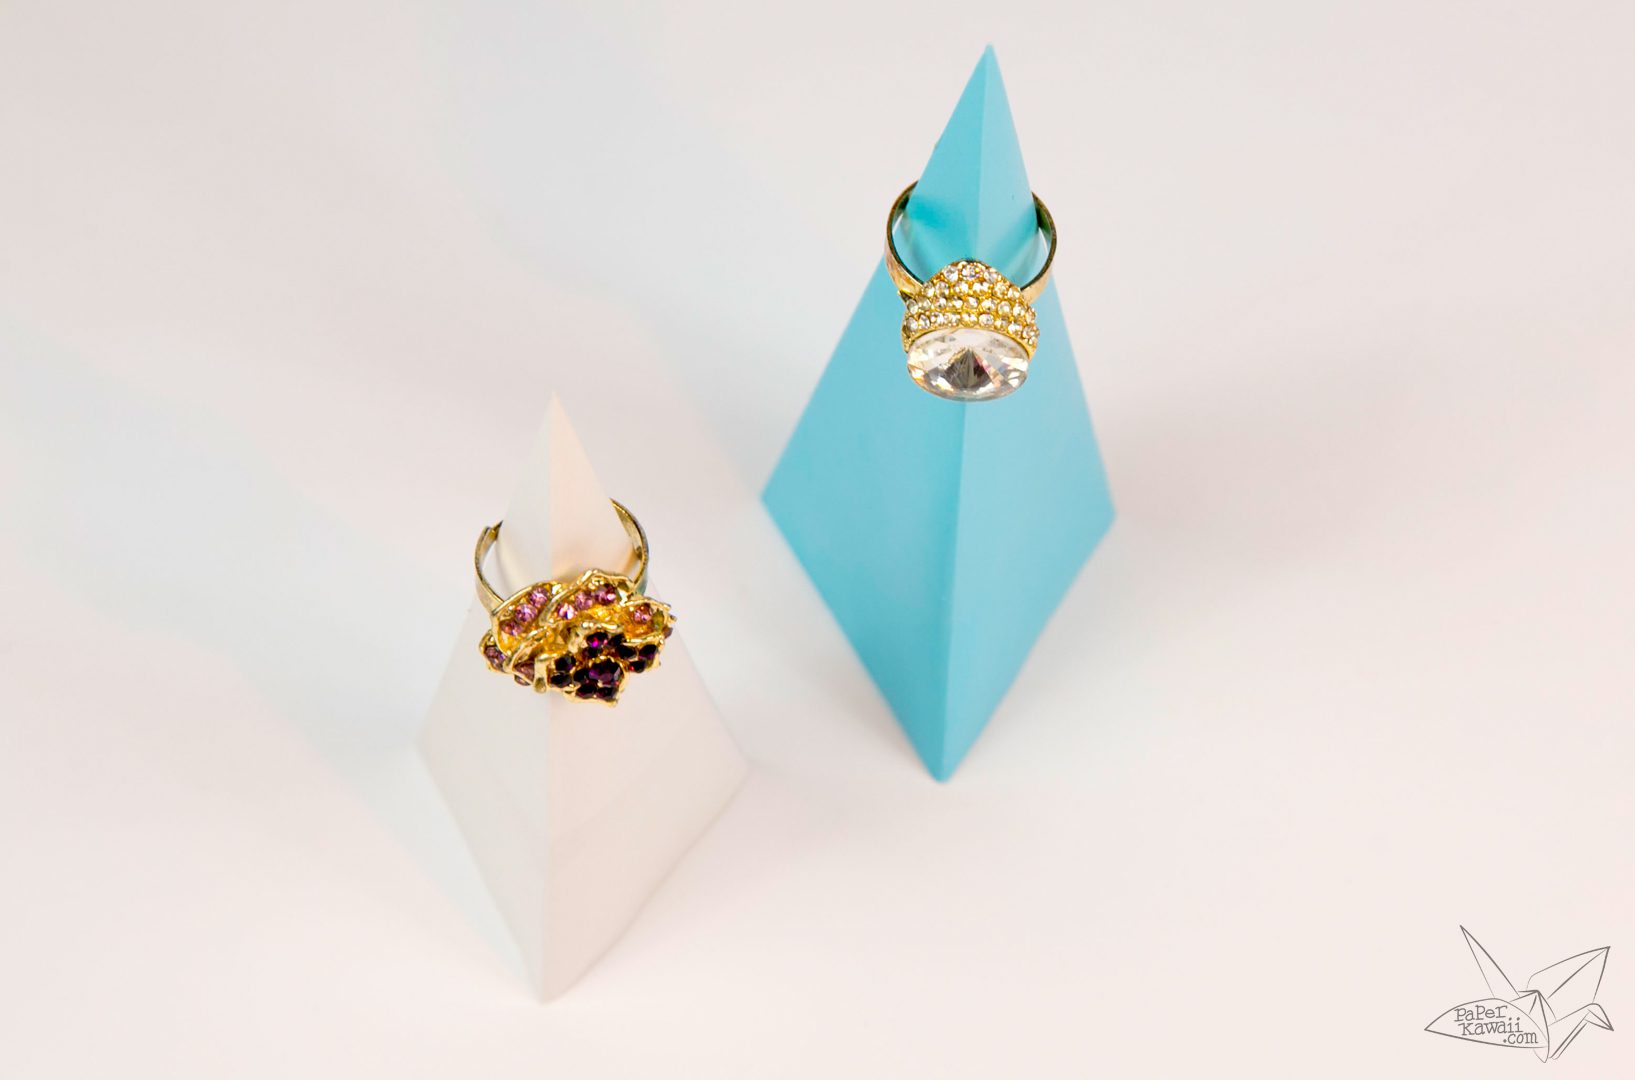 DIY Napkin Rings with Origami Paper and Bonus Fabric Napkin Tutorial